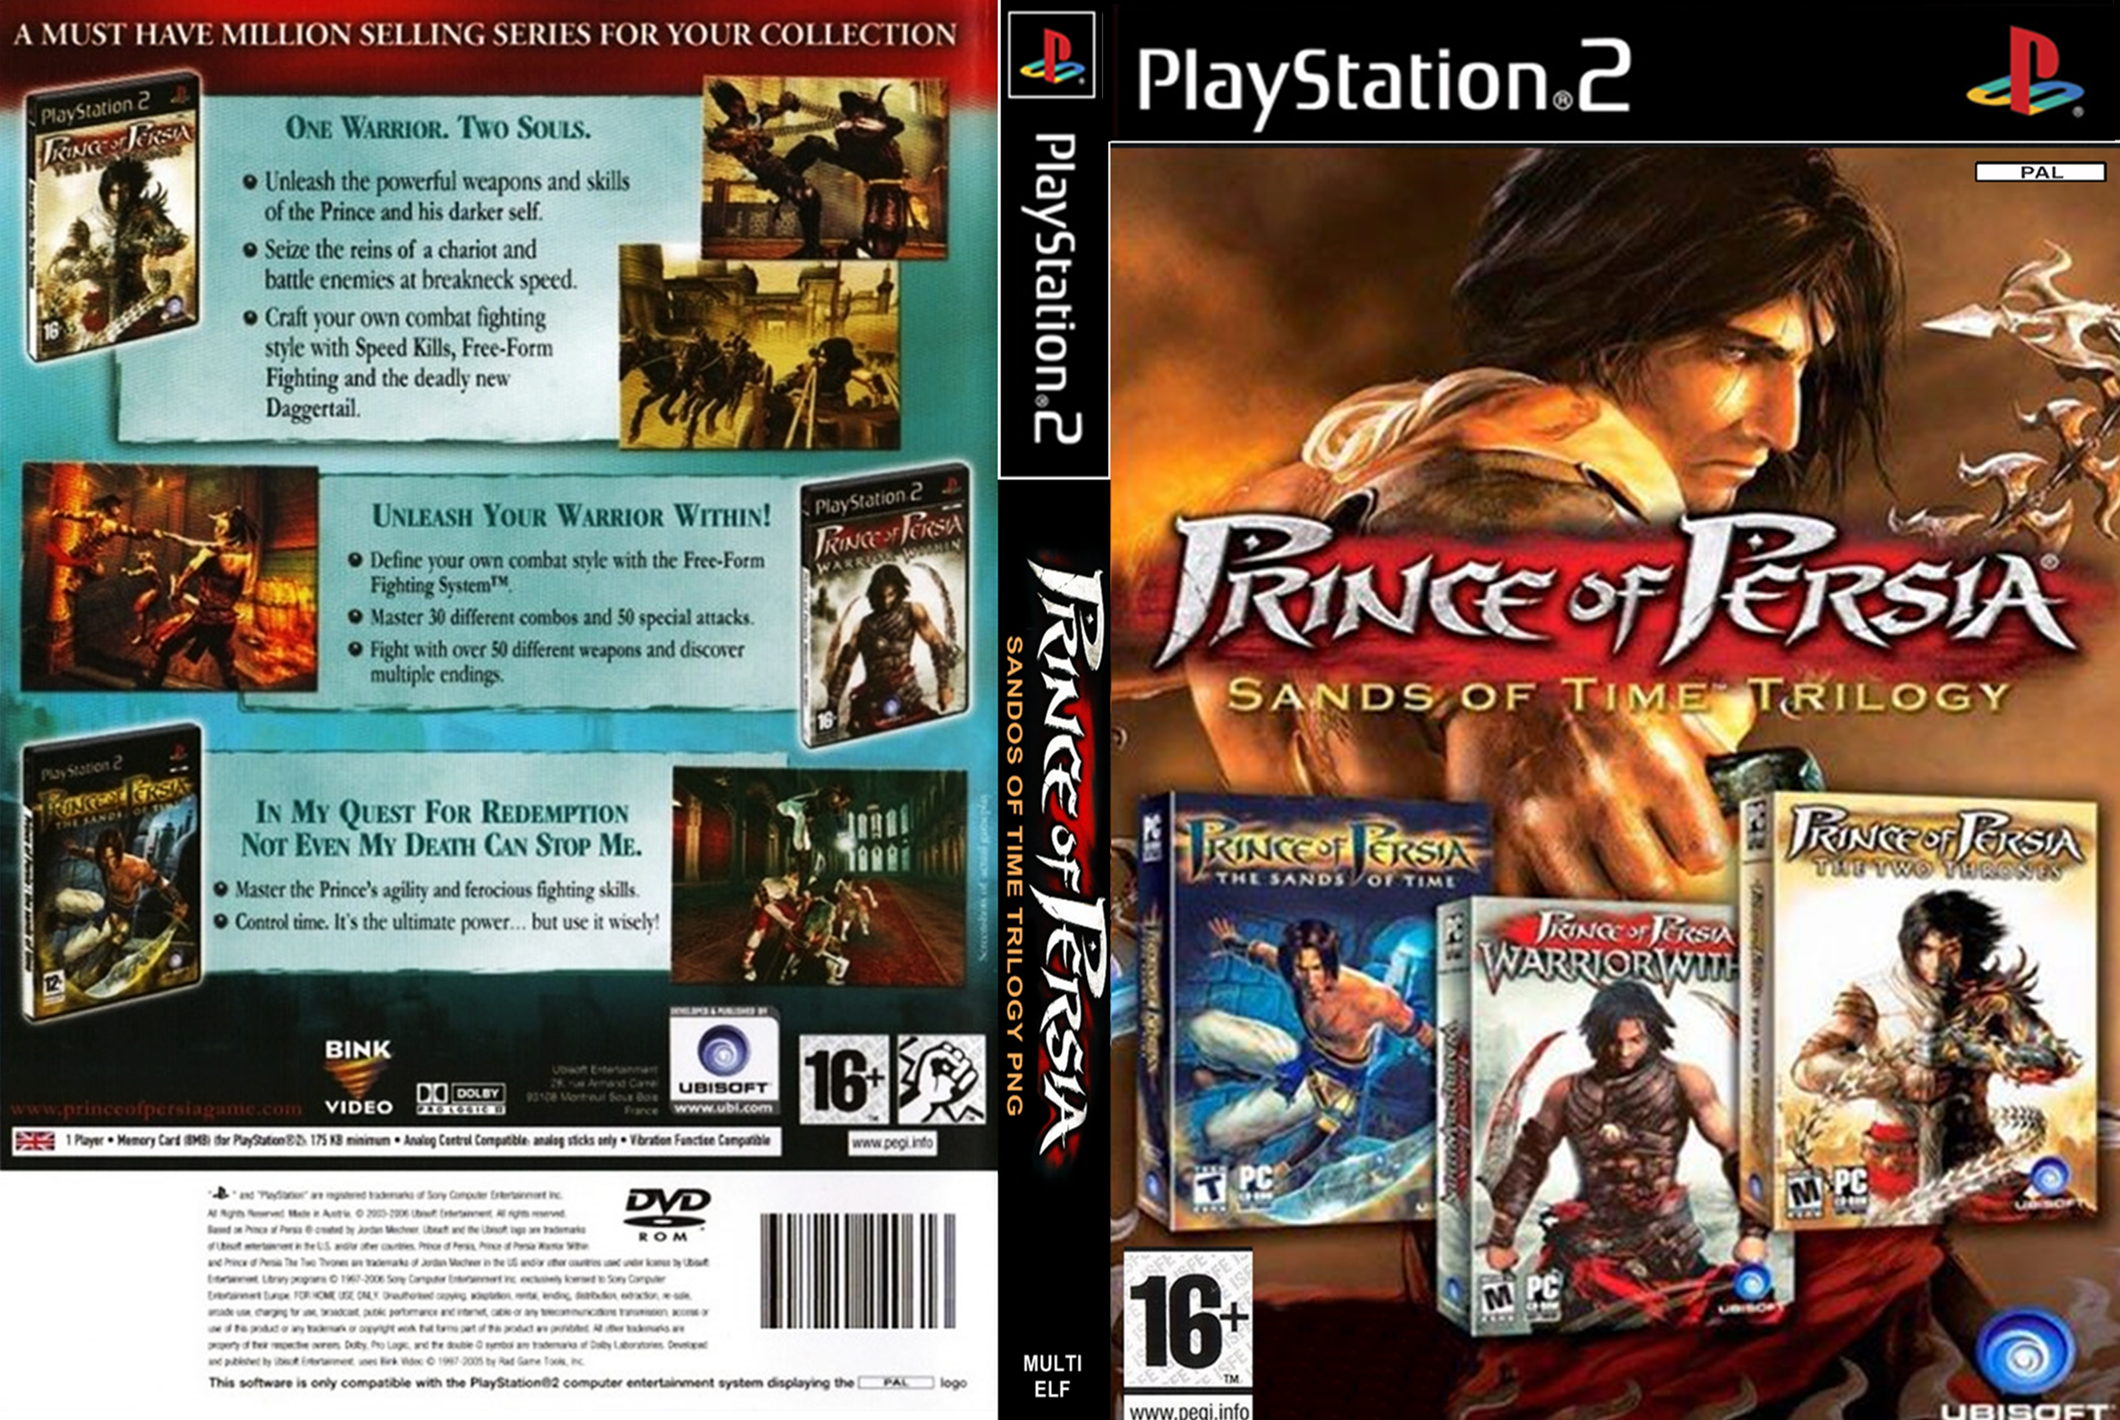 PRINCE OF PERSIA TRILOGY PS2 (NOVO) – GAMESTATION X